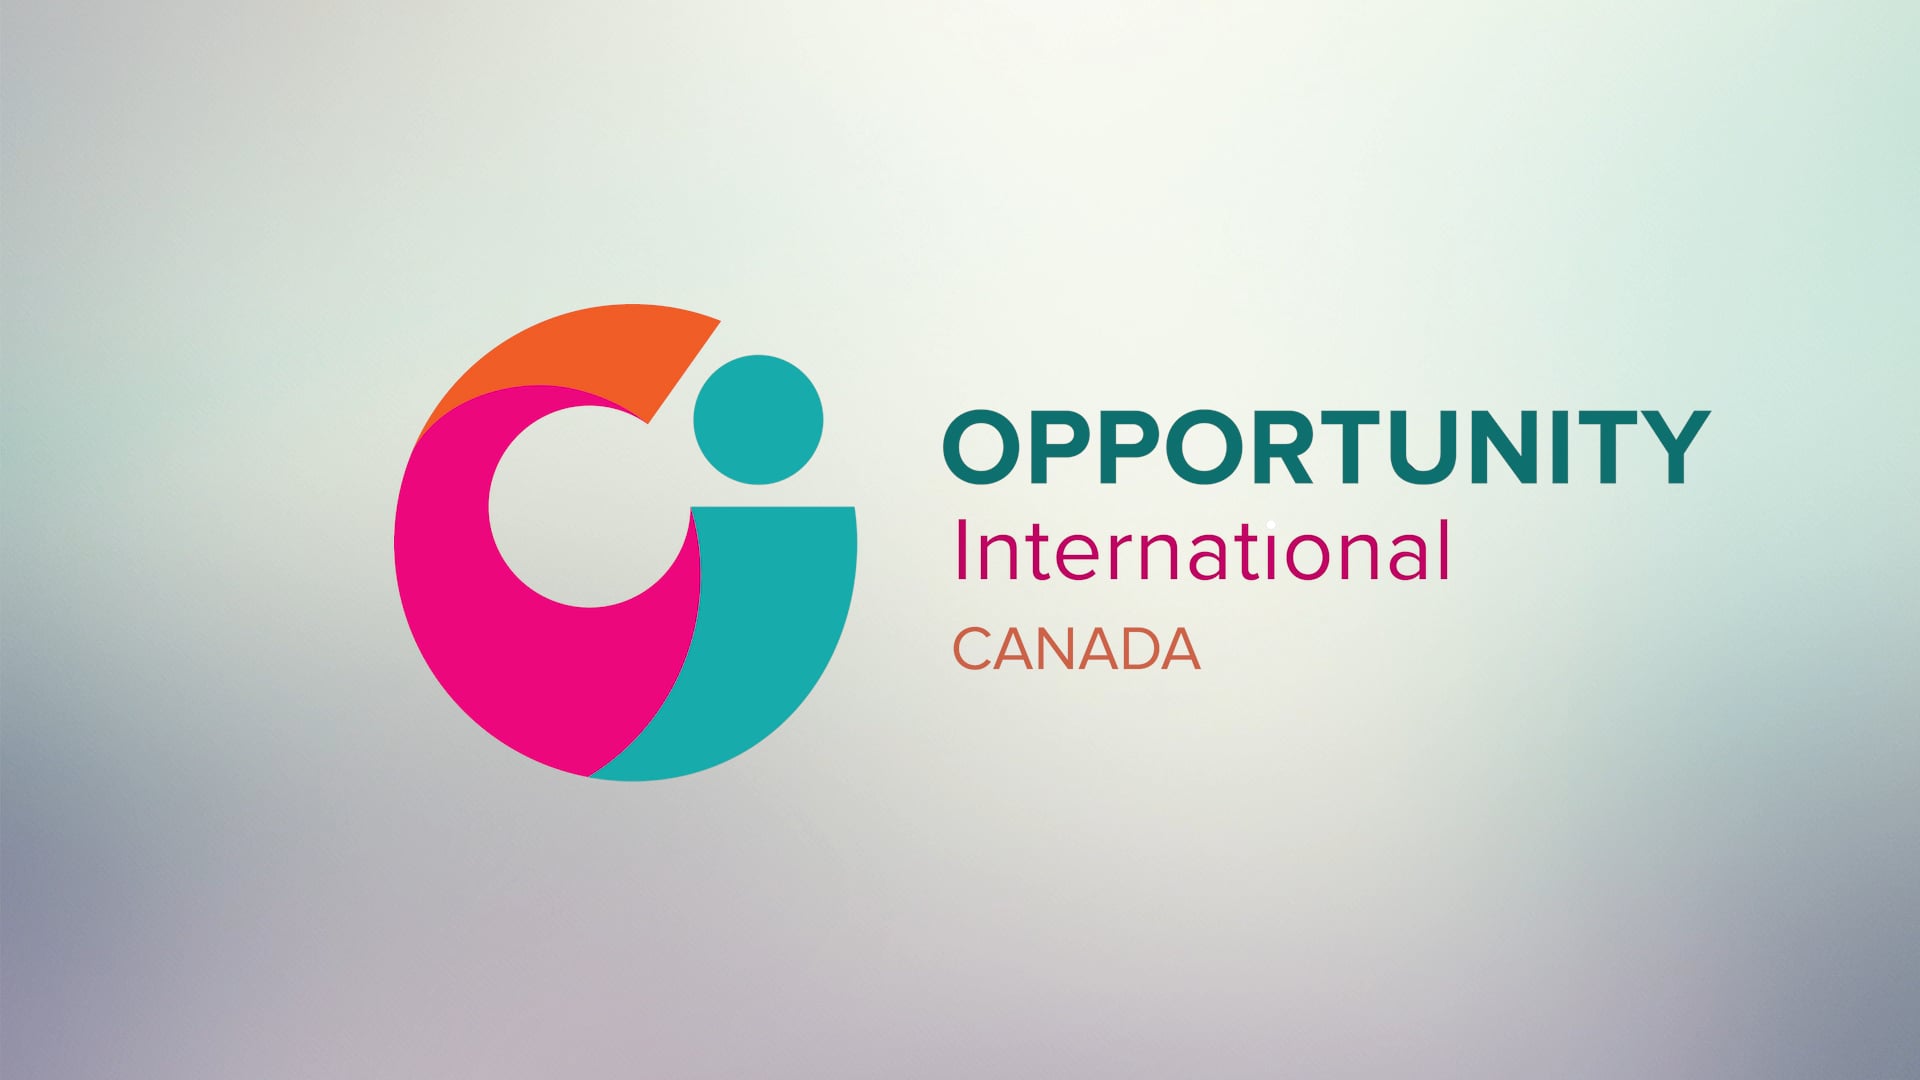 Opportunity International Canada Logo Animation